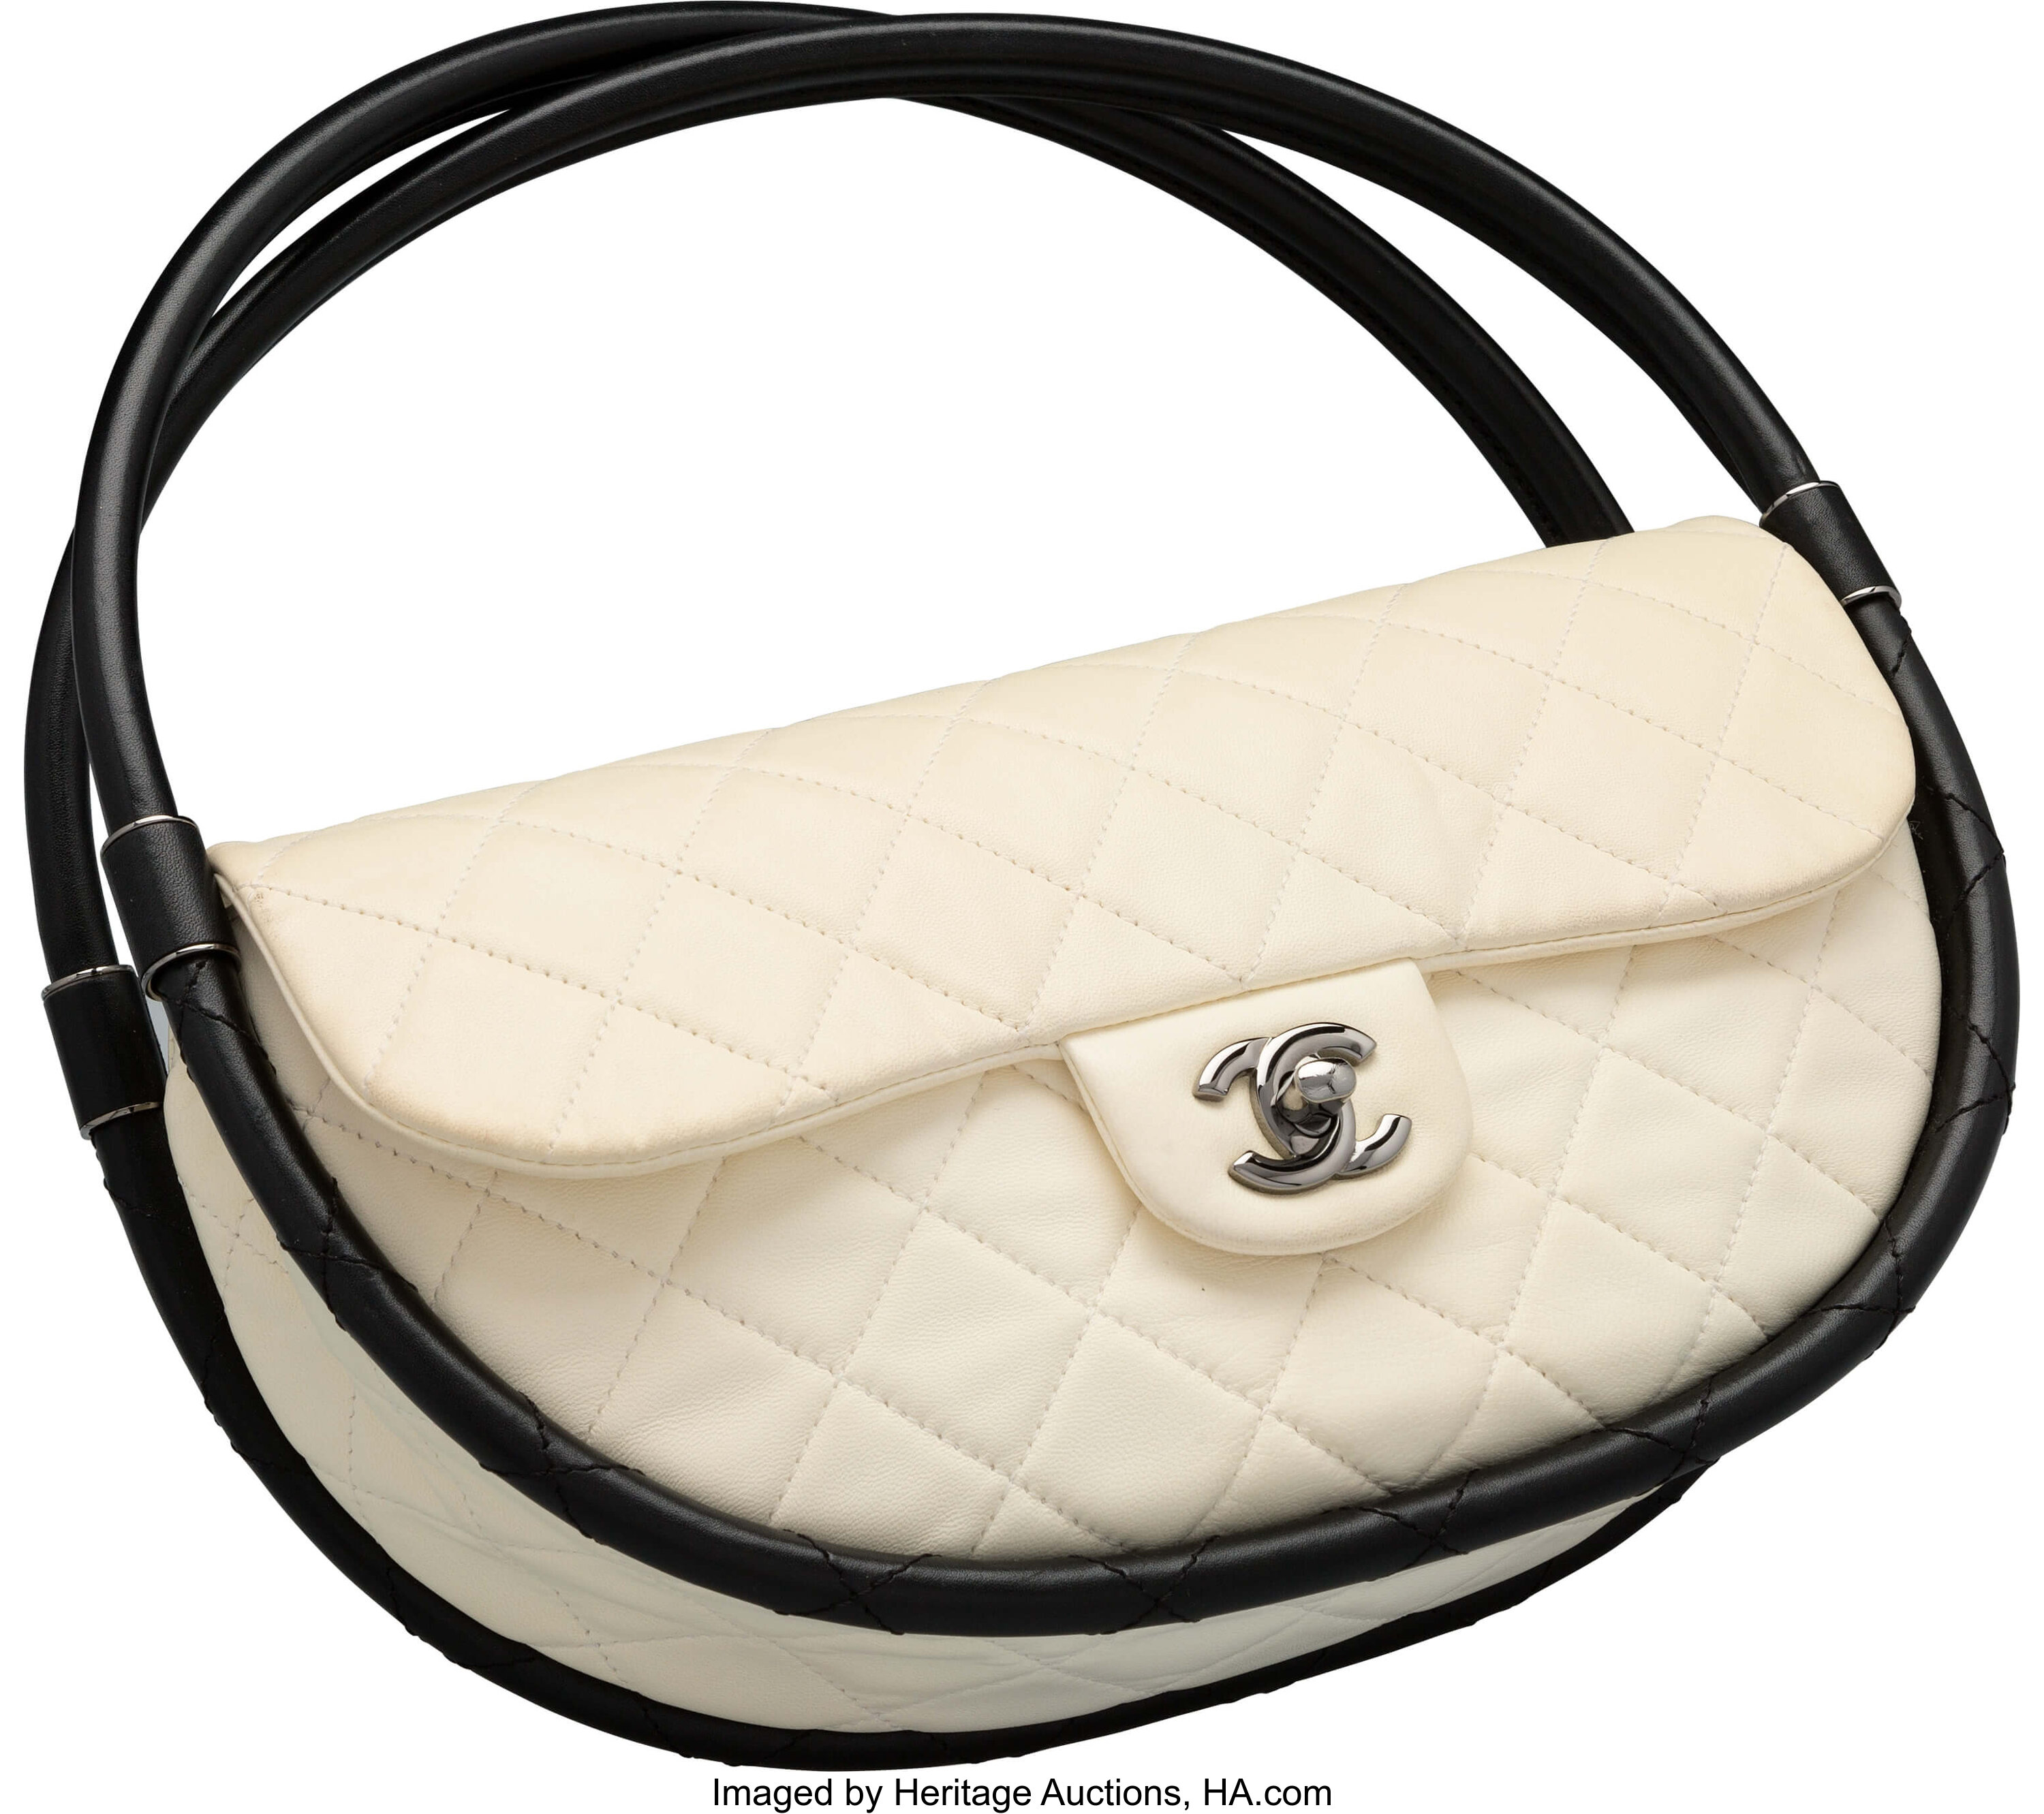 Chanel Hula Hoop Bag First Impression + What Fits // Medium Chanel Hula Hoop  in Black Lambskin 